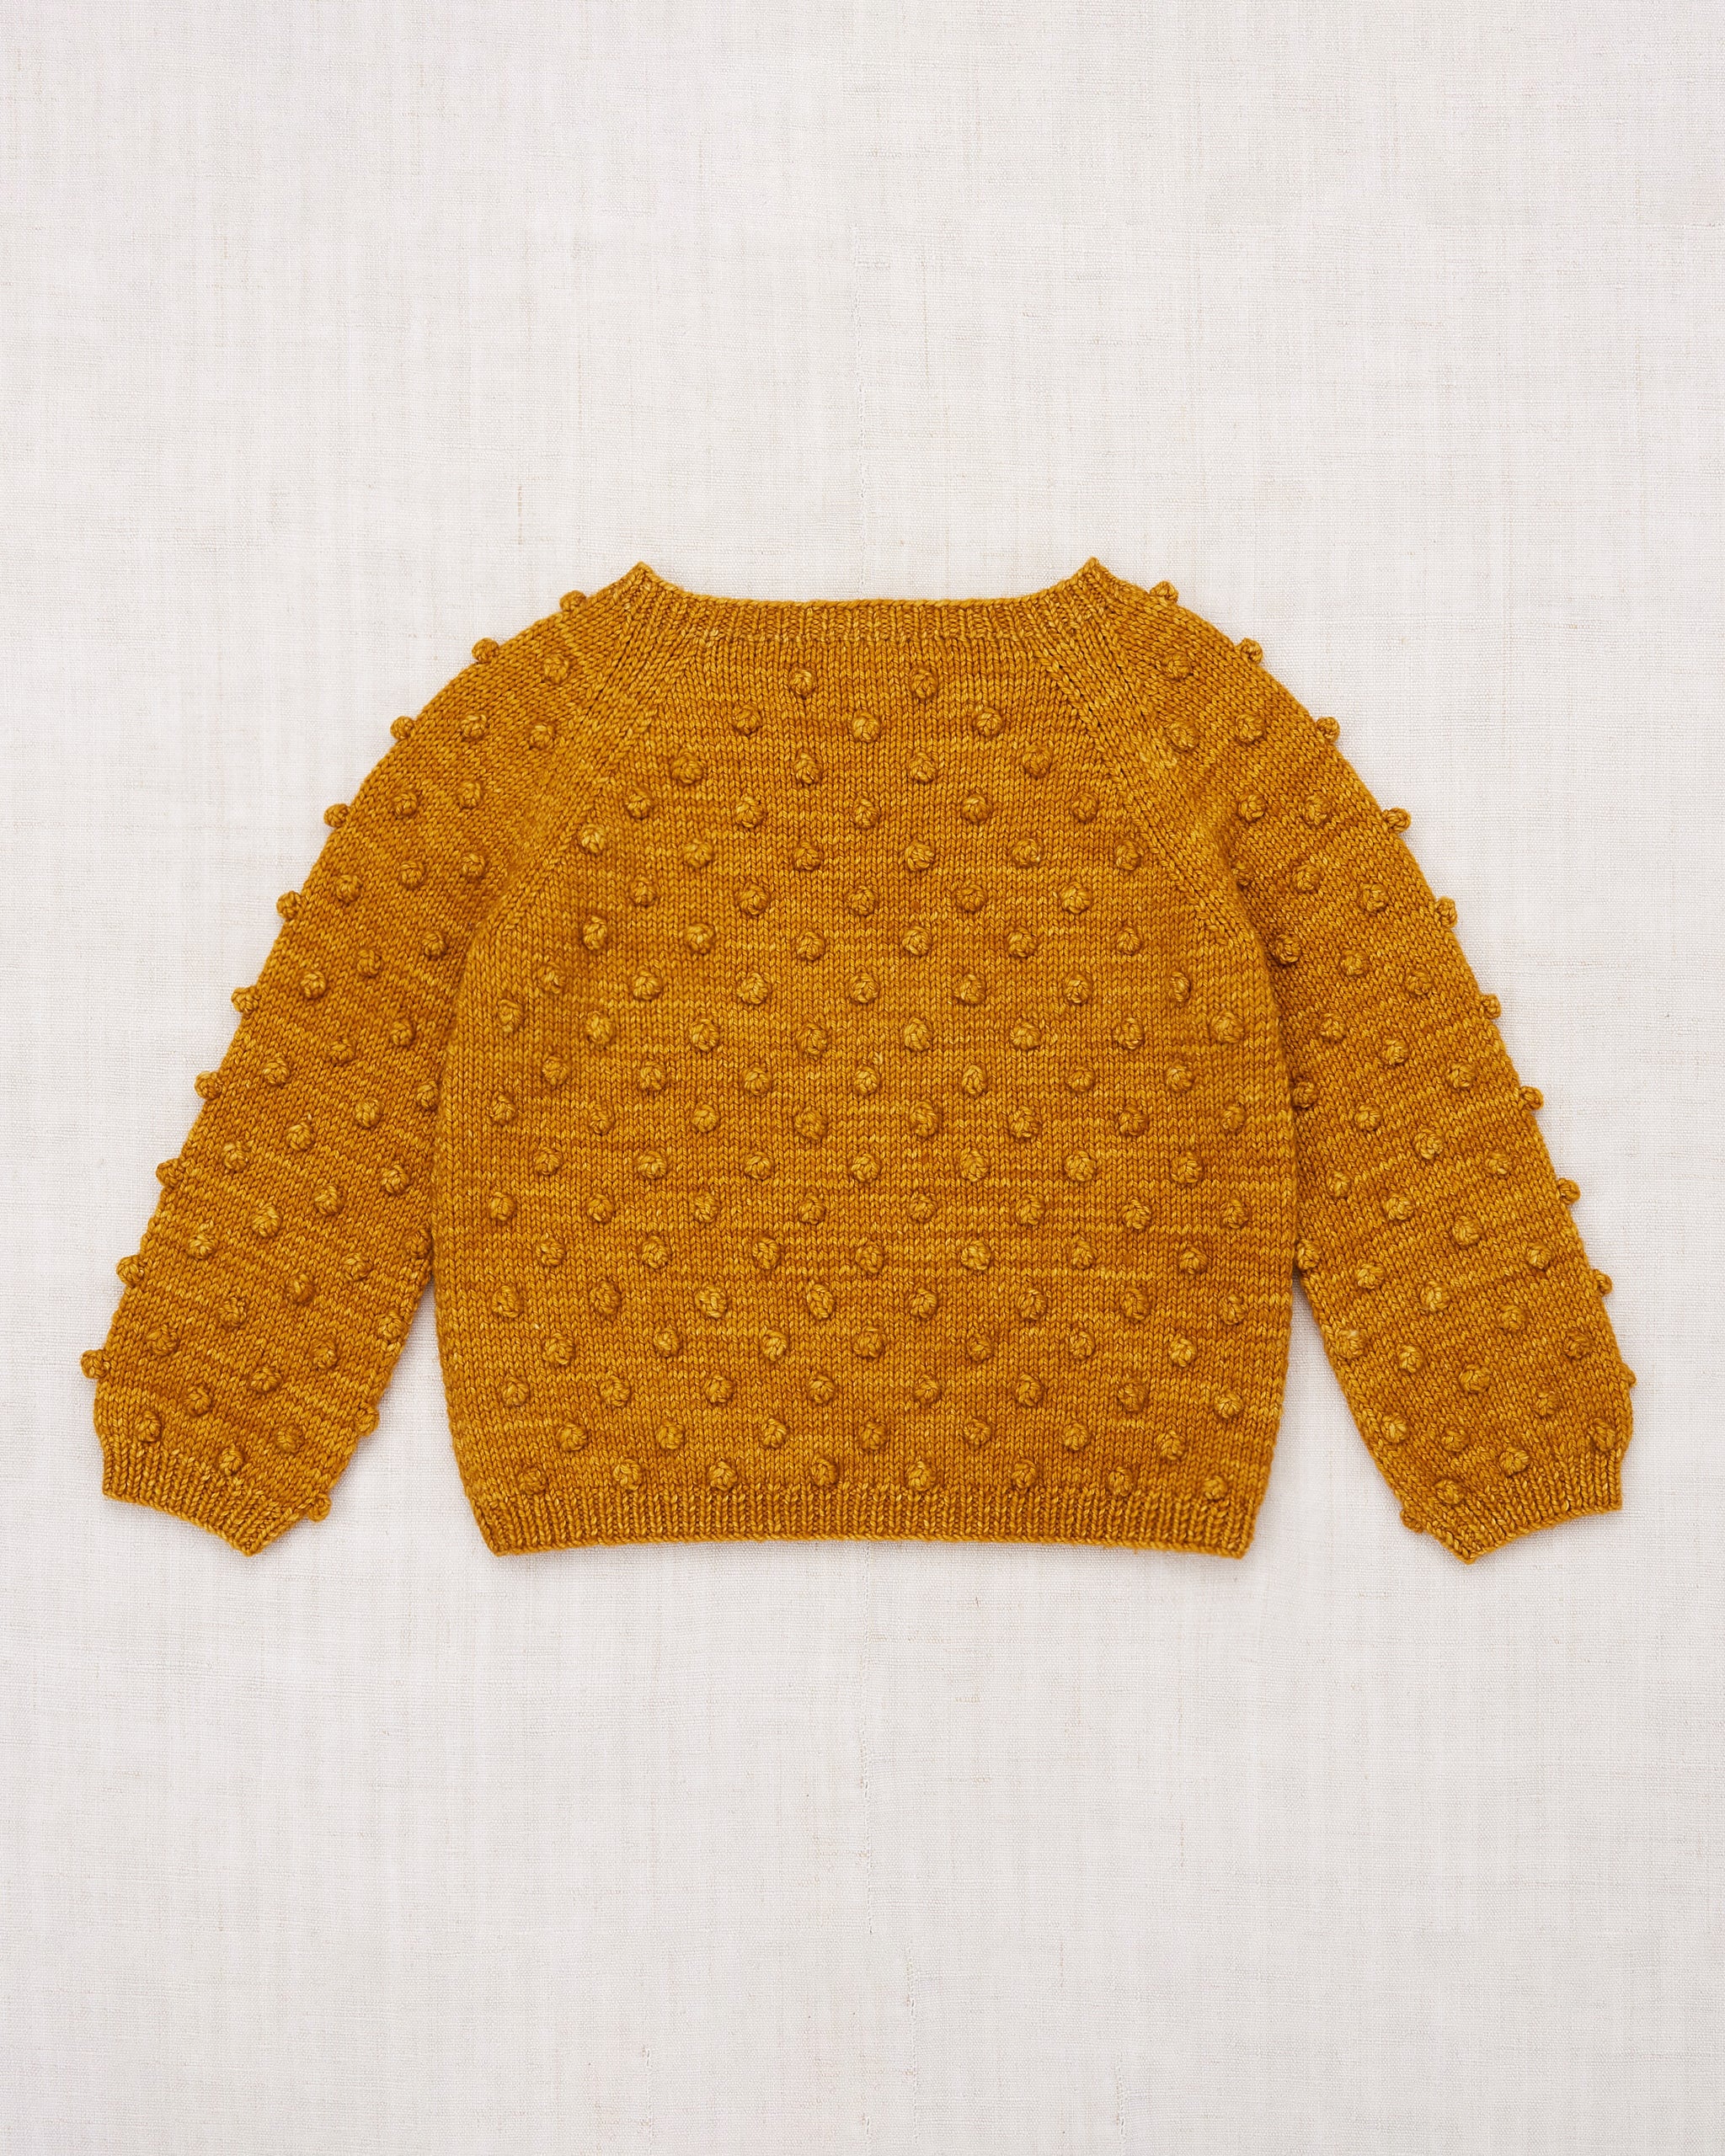 size8-9ymisha and puff☪️Popcorn Sweater 8-9y